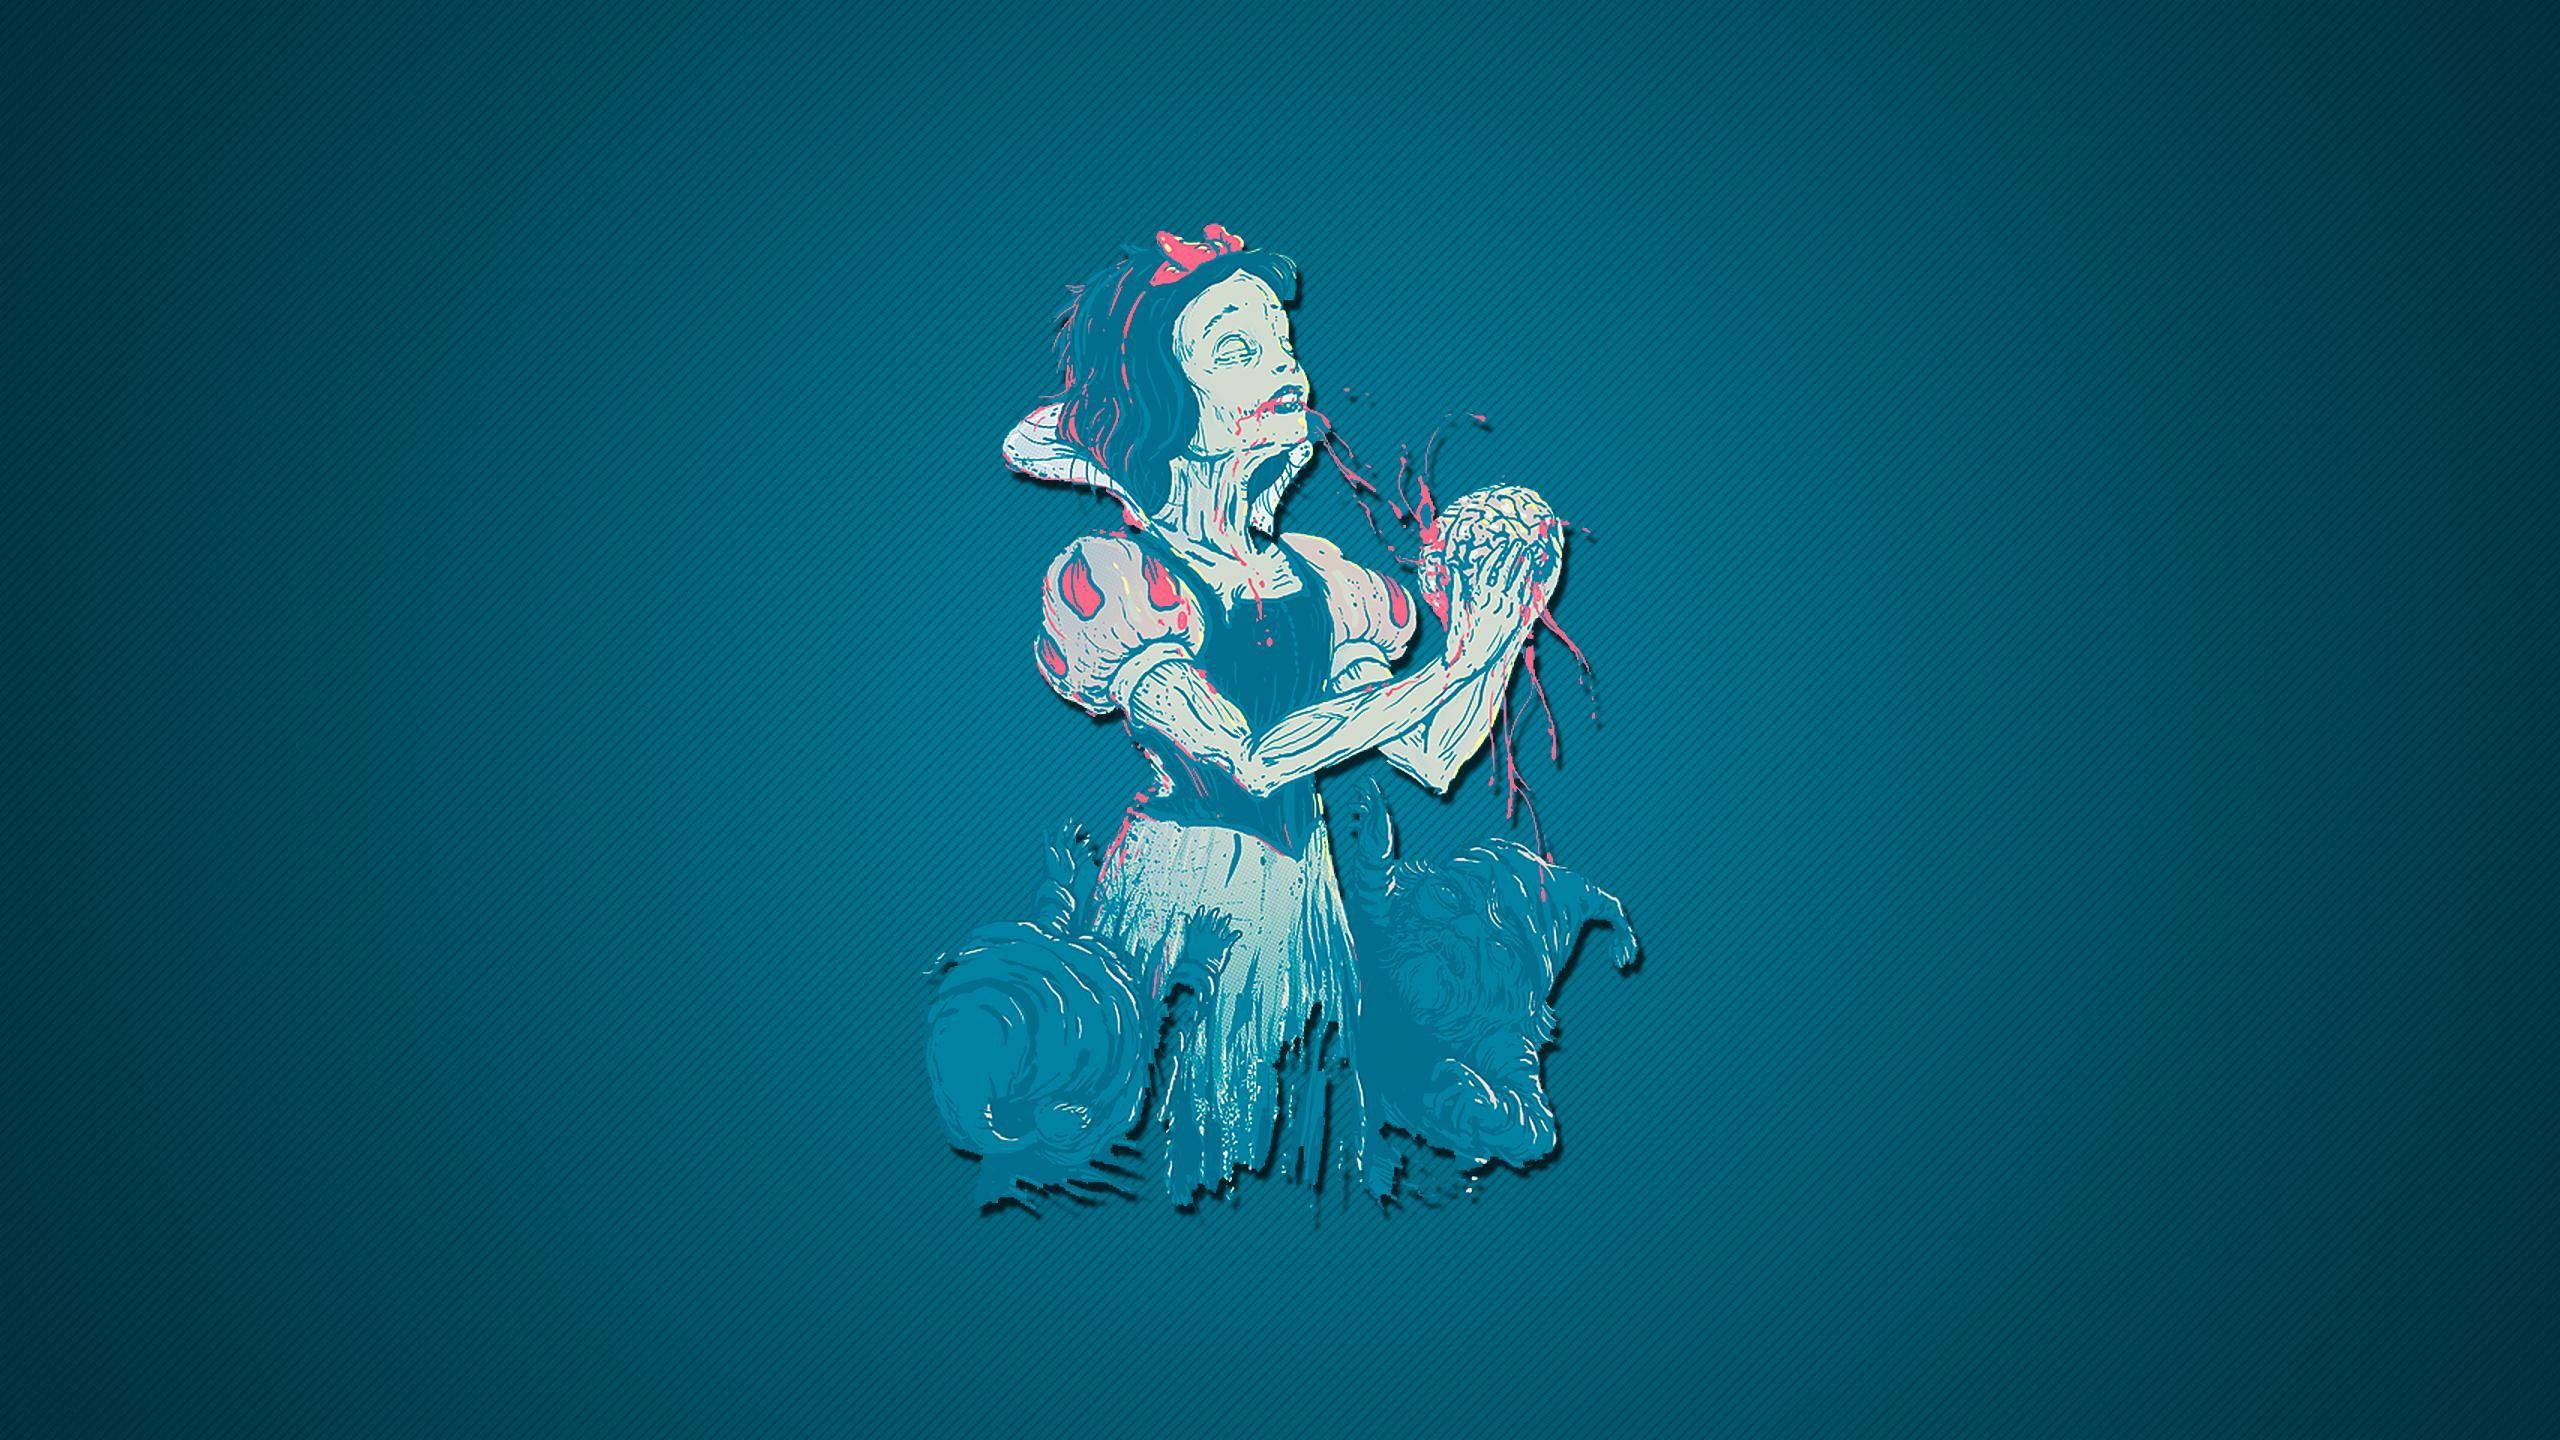 General 2560x1440 artwork zombies brain blood Snow White blue blue background fantasy art horror fantasy girl gore simple background digital art